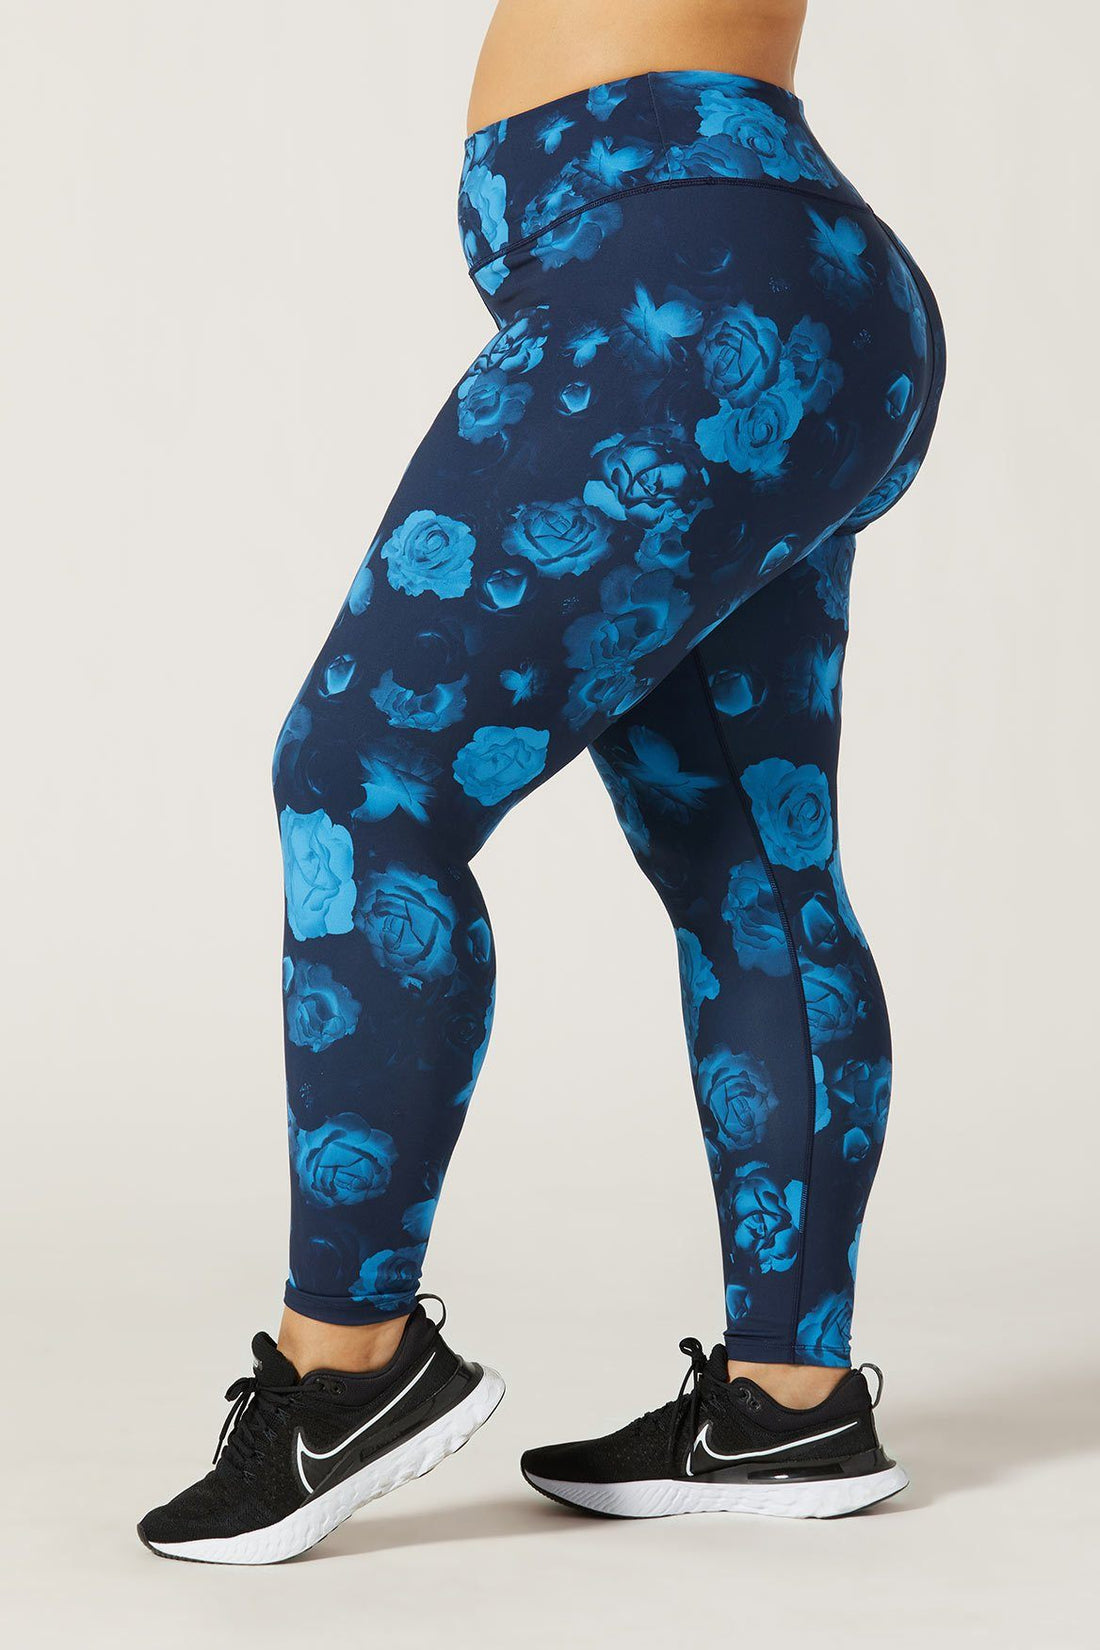 Women's black blue lycra polyester leggings neon spandex